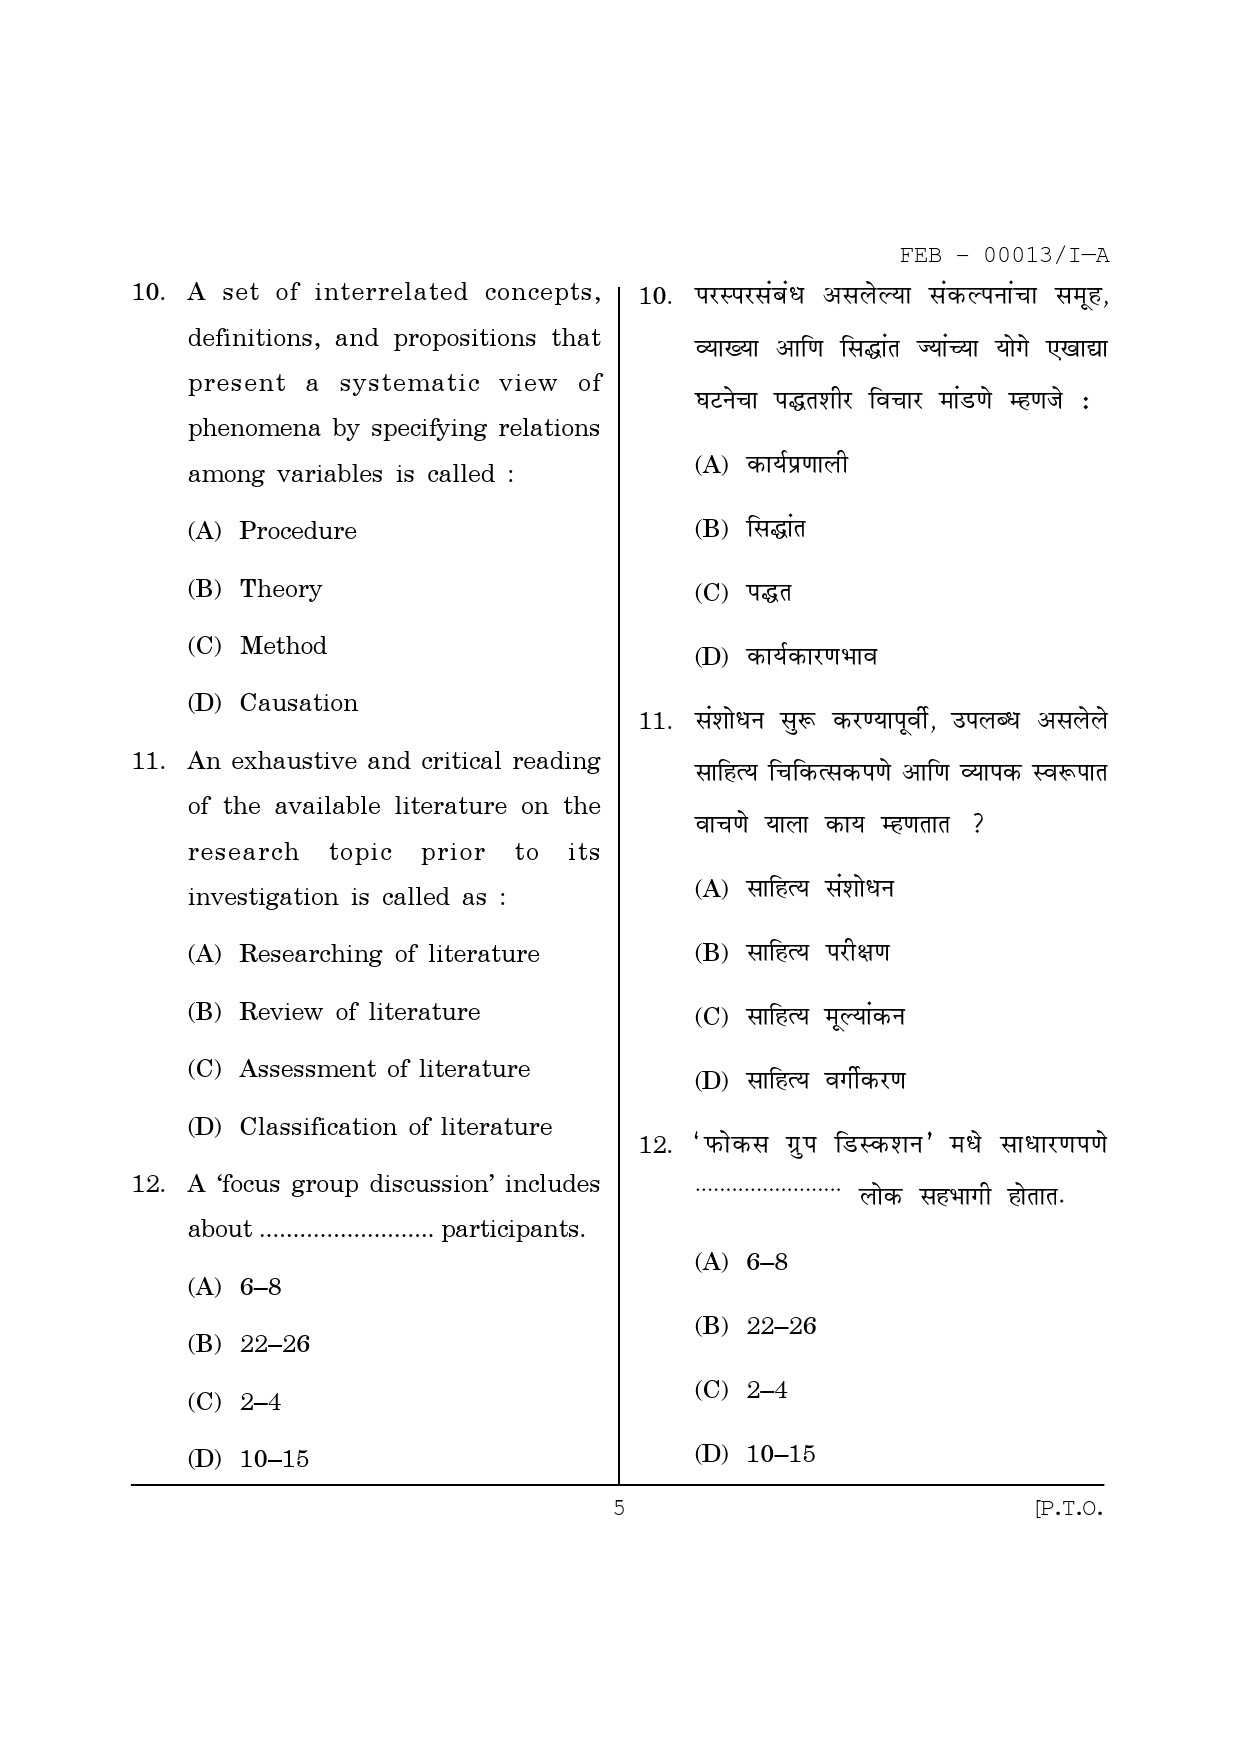 Maharashtra SET Paper I Question February 2013 5